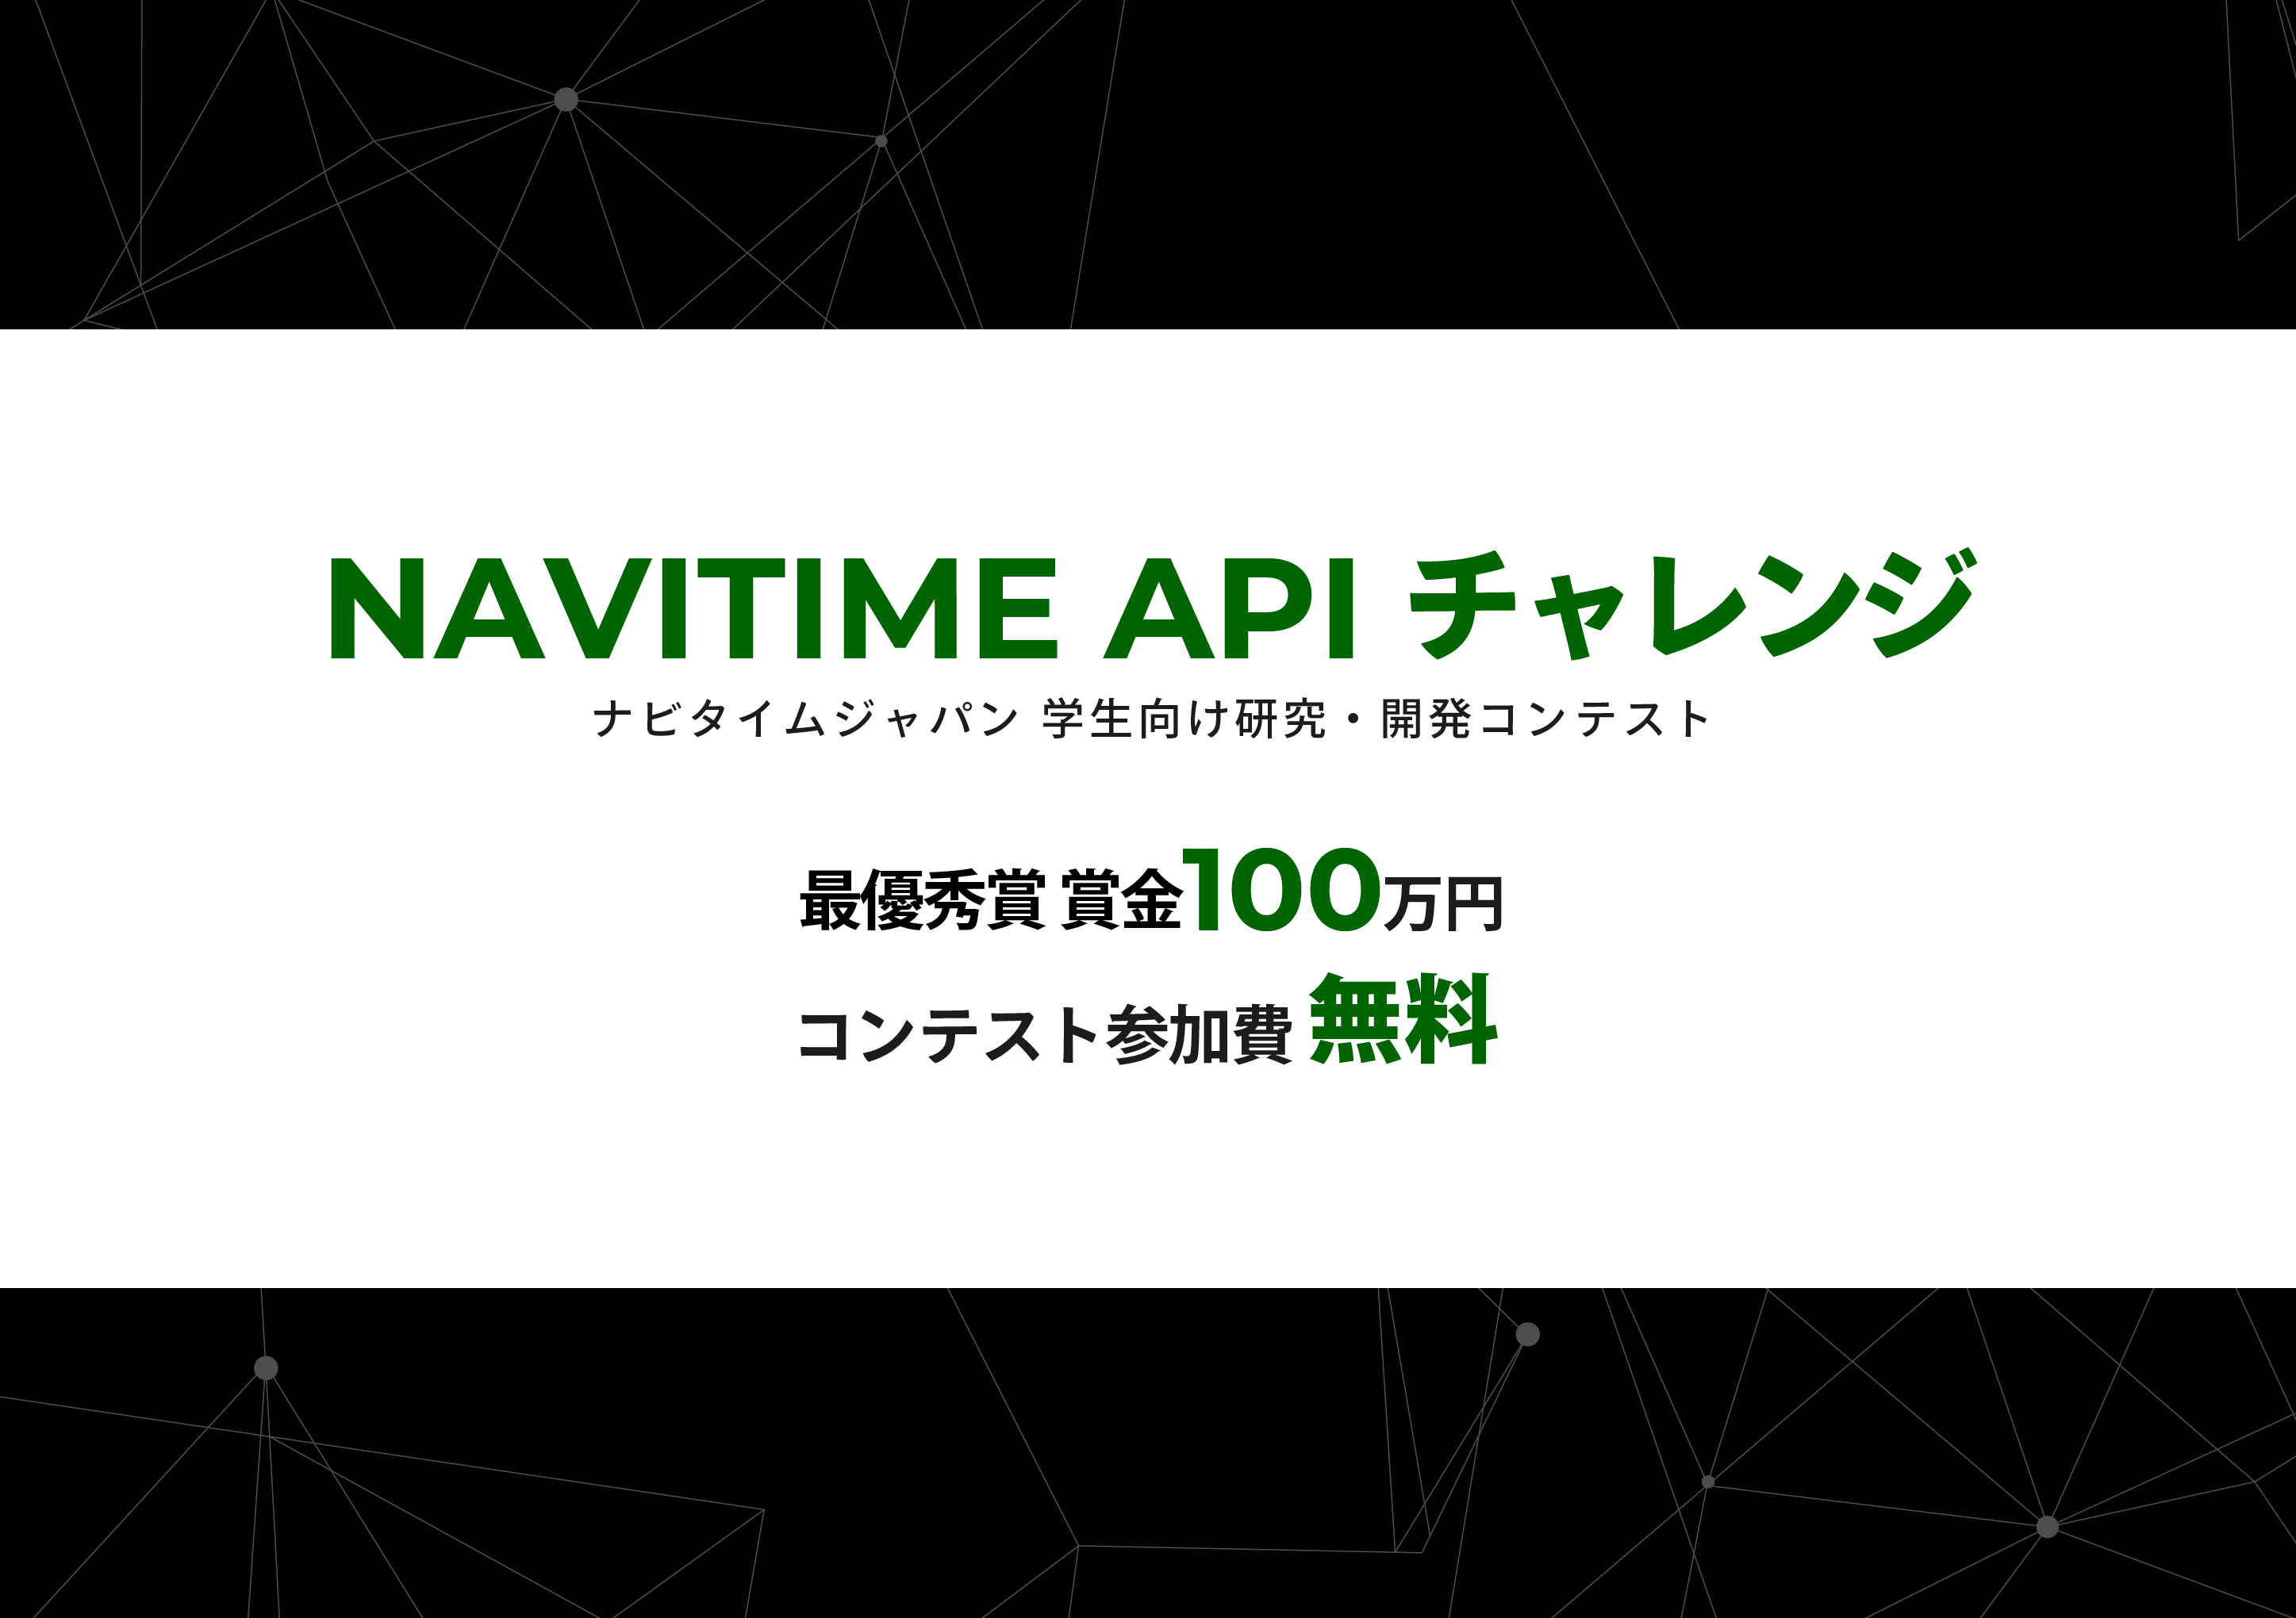 http://corporate.navitime.co.jp/topics/press.png